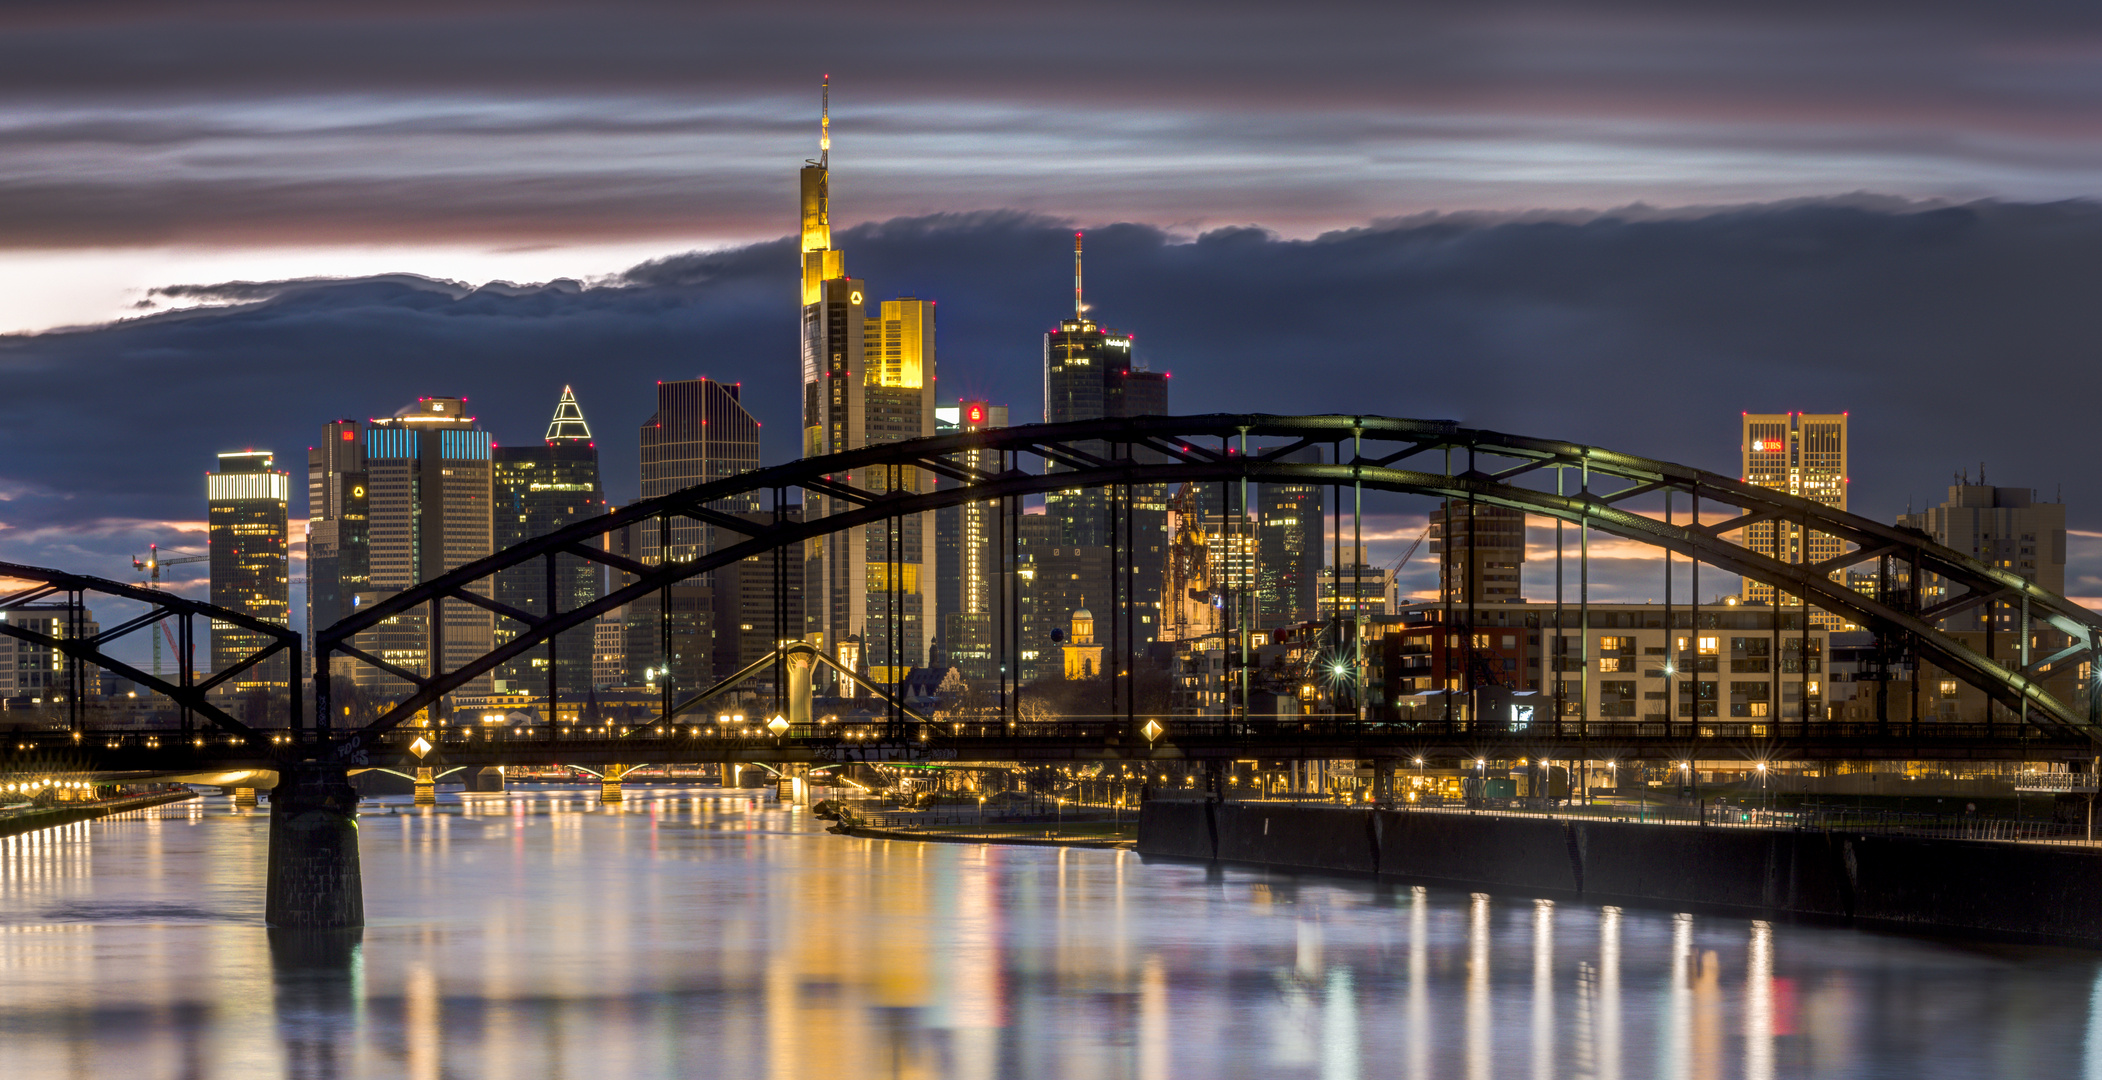 Skyline - Frankfurt am Main